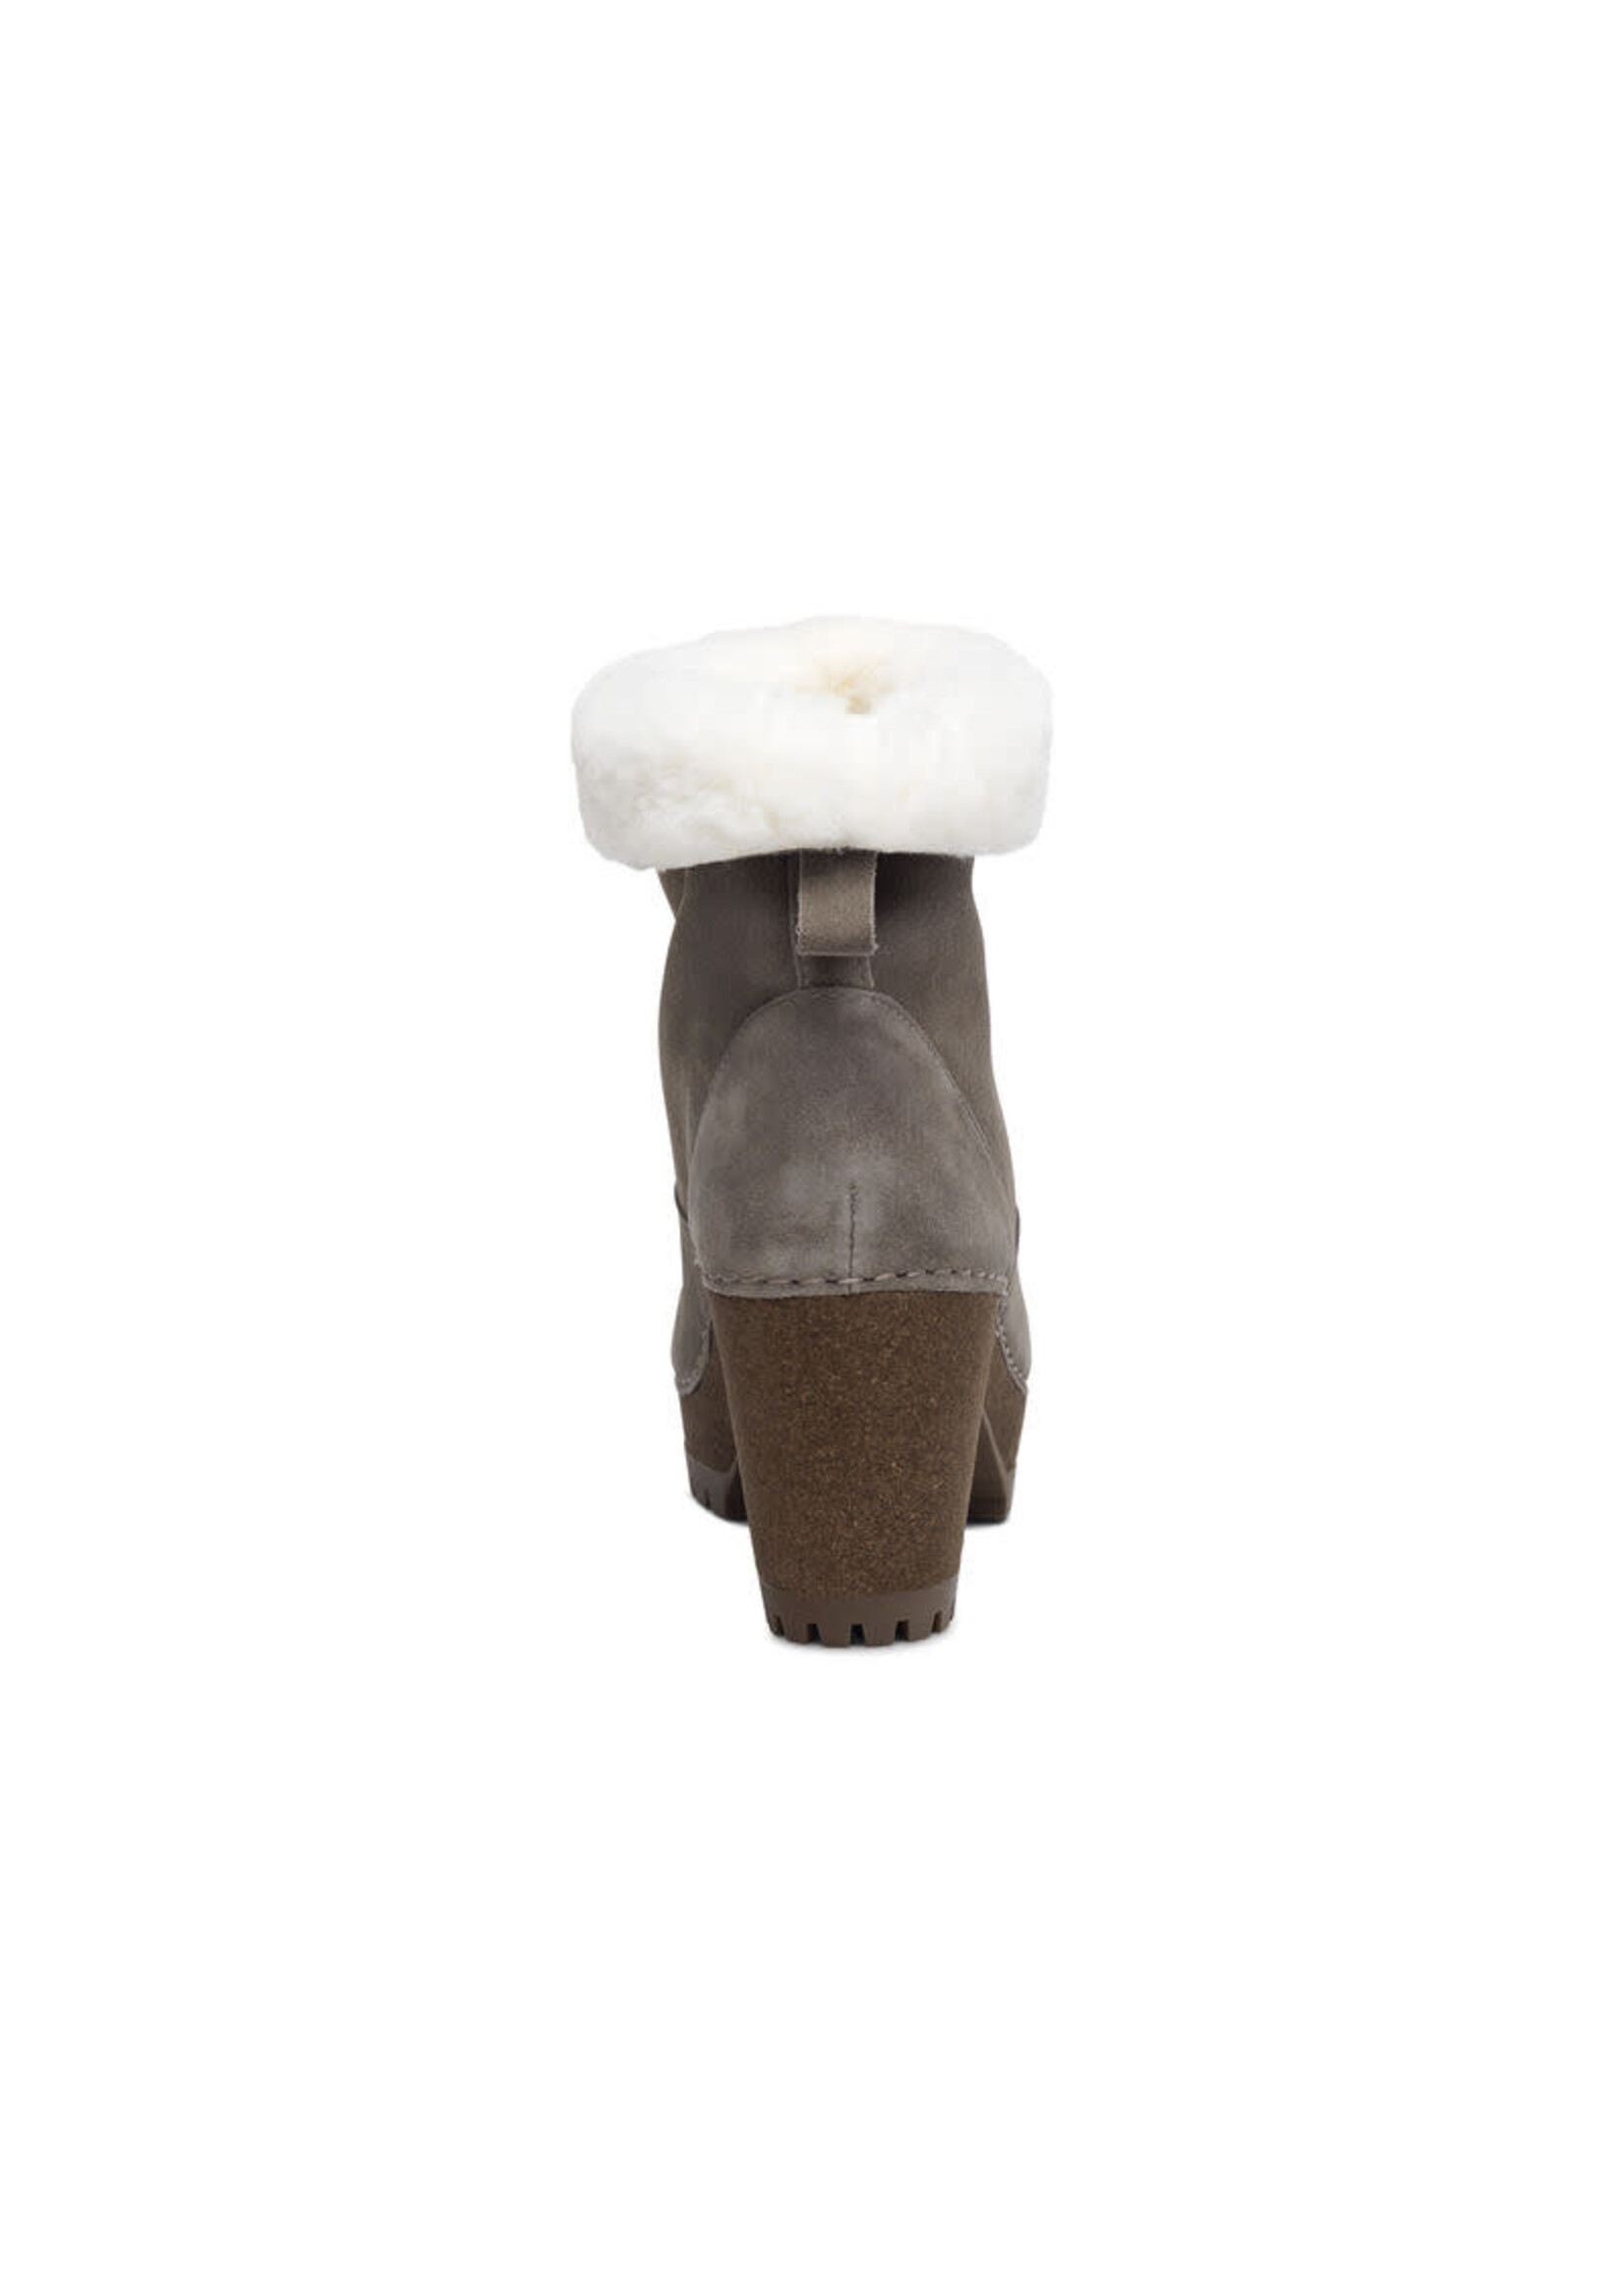 Aetrex Scarlett Boots in Mushroom Suede by Aetrex Water Resistant